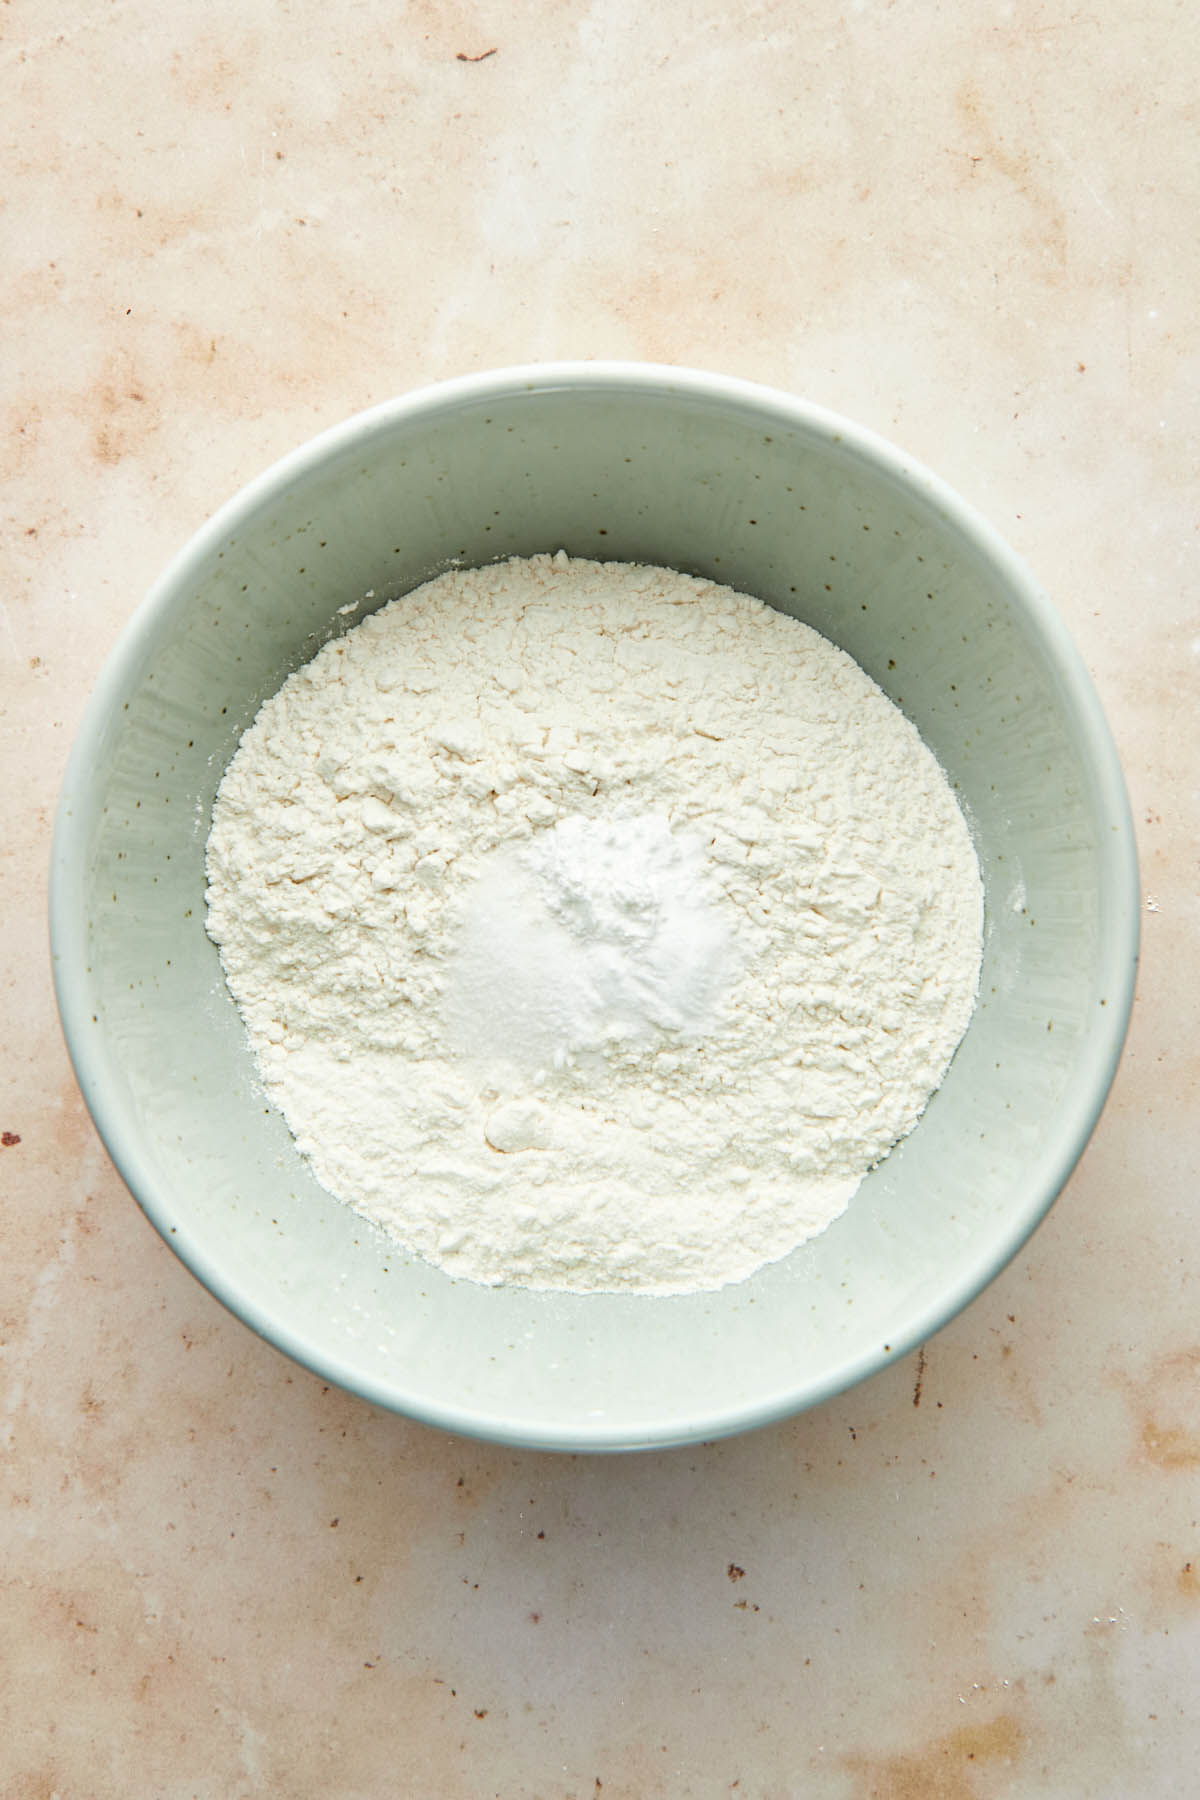 Unmixed flour, baking powder, baking soda, and salt in a light blue mixing bowl.